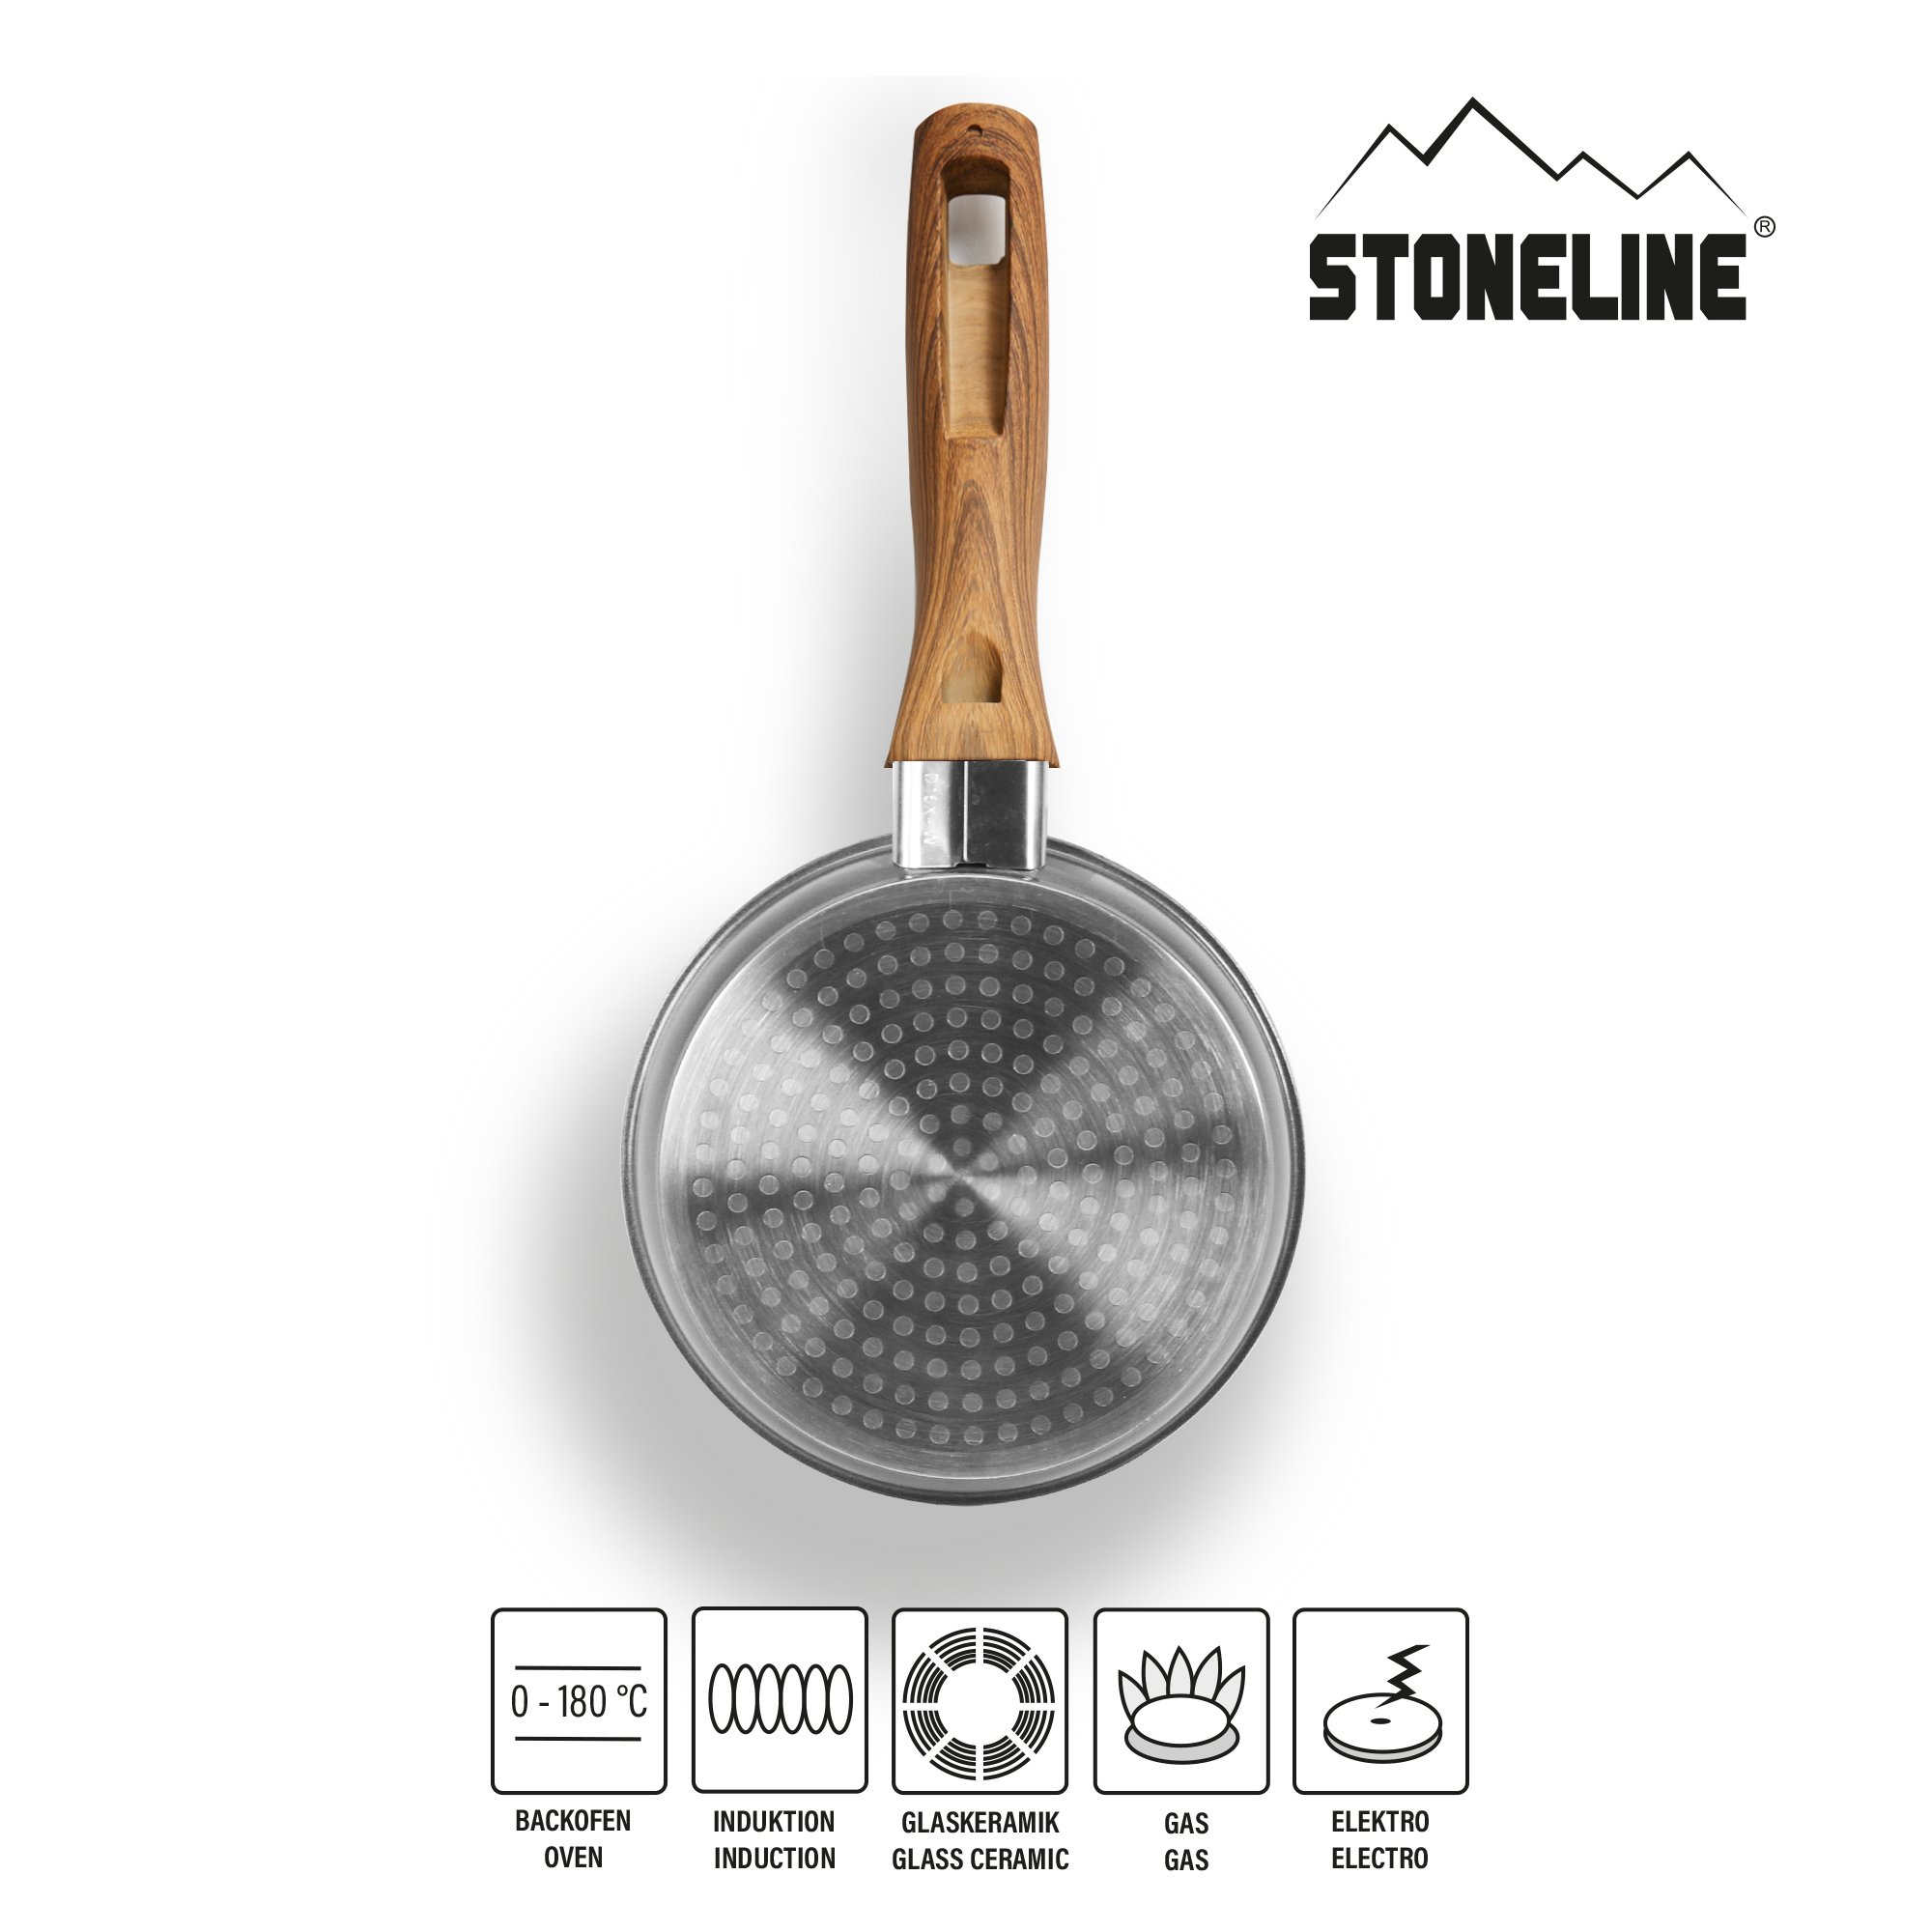 STONELINE® Back to Nature sartén 14 cm, sartén antiadherente para tortillas, apta para inducción